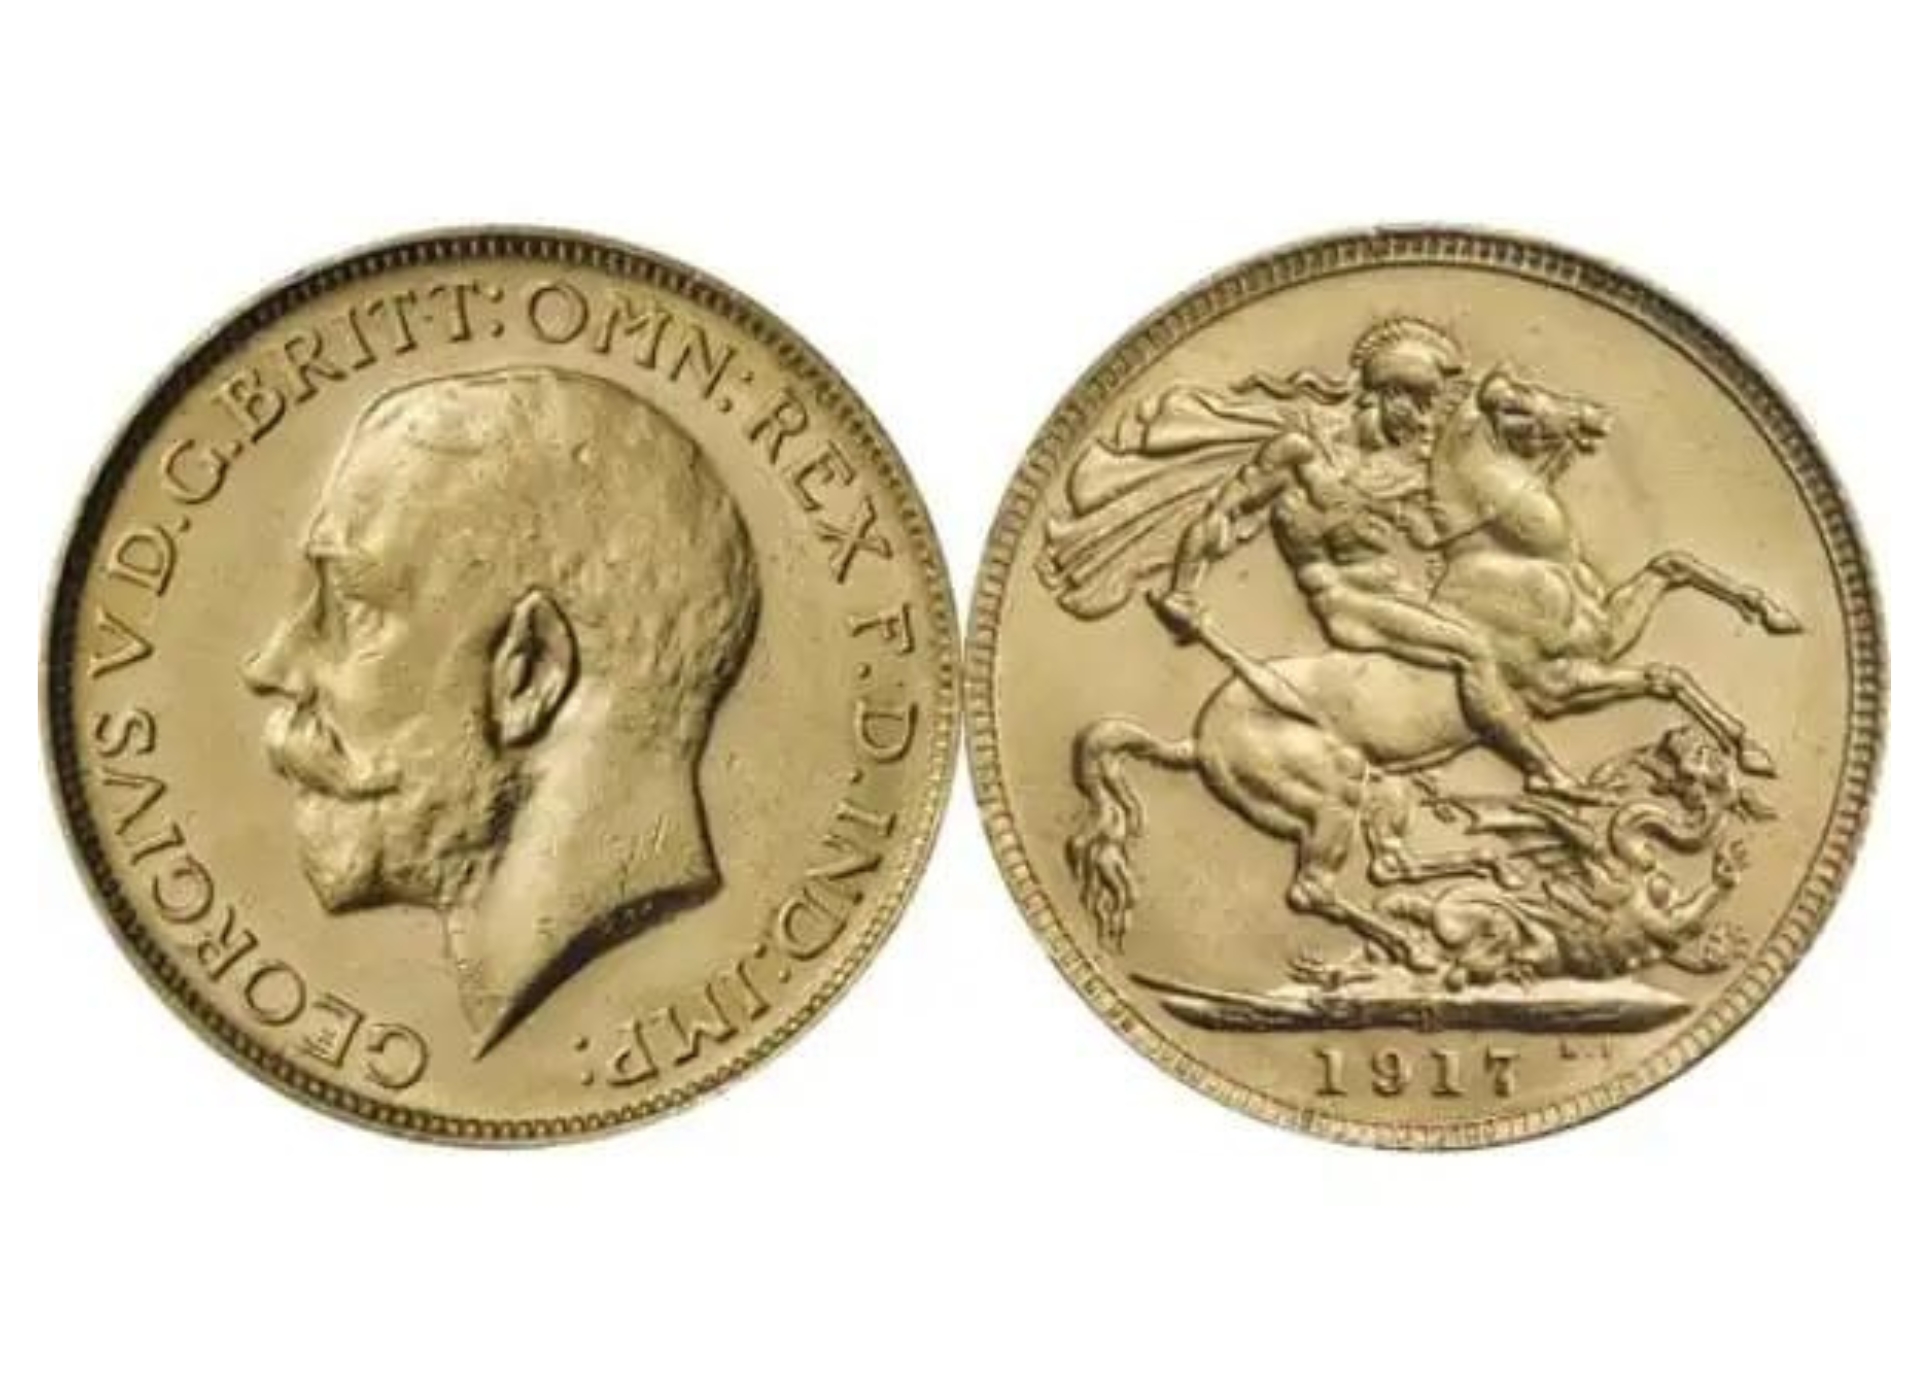 Foto: The Royal Mint
